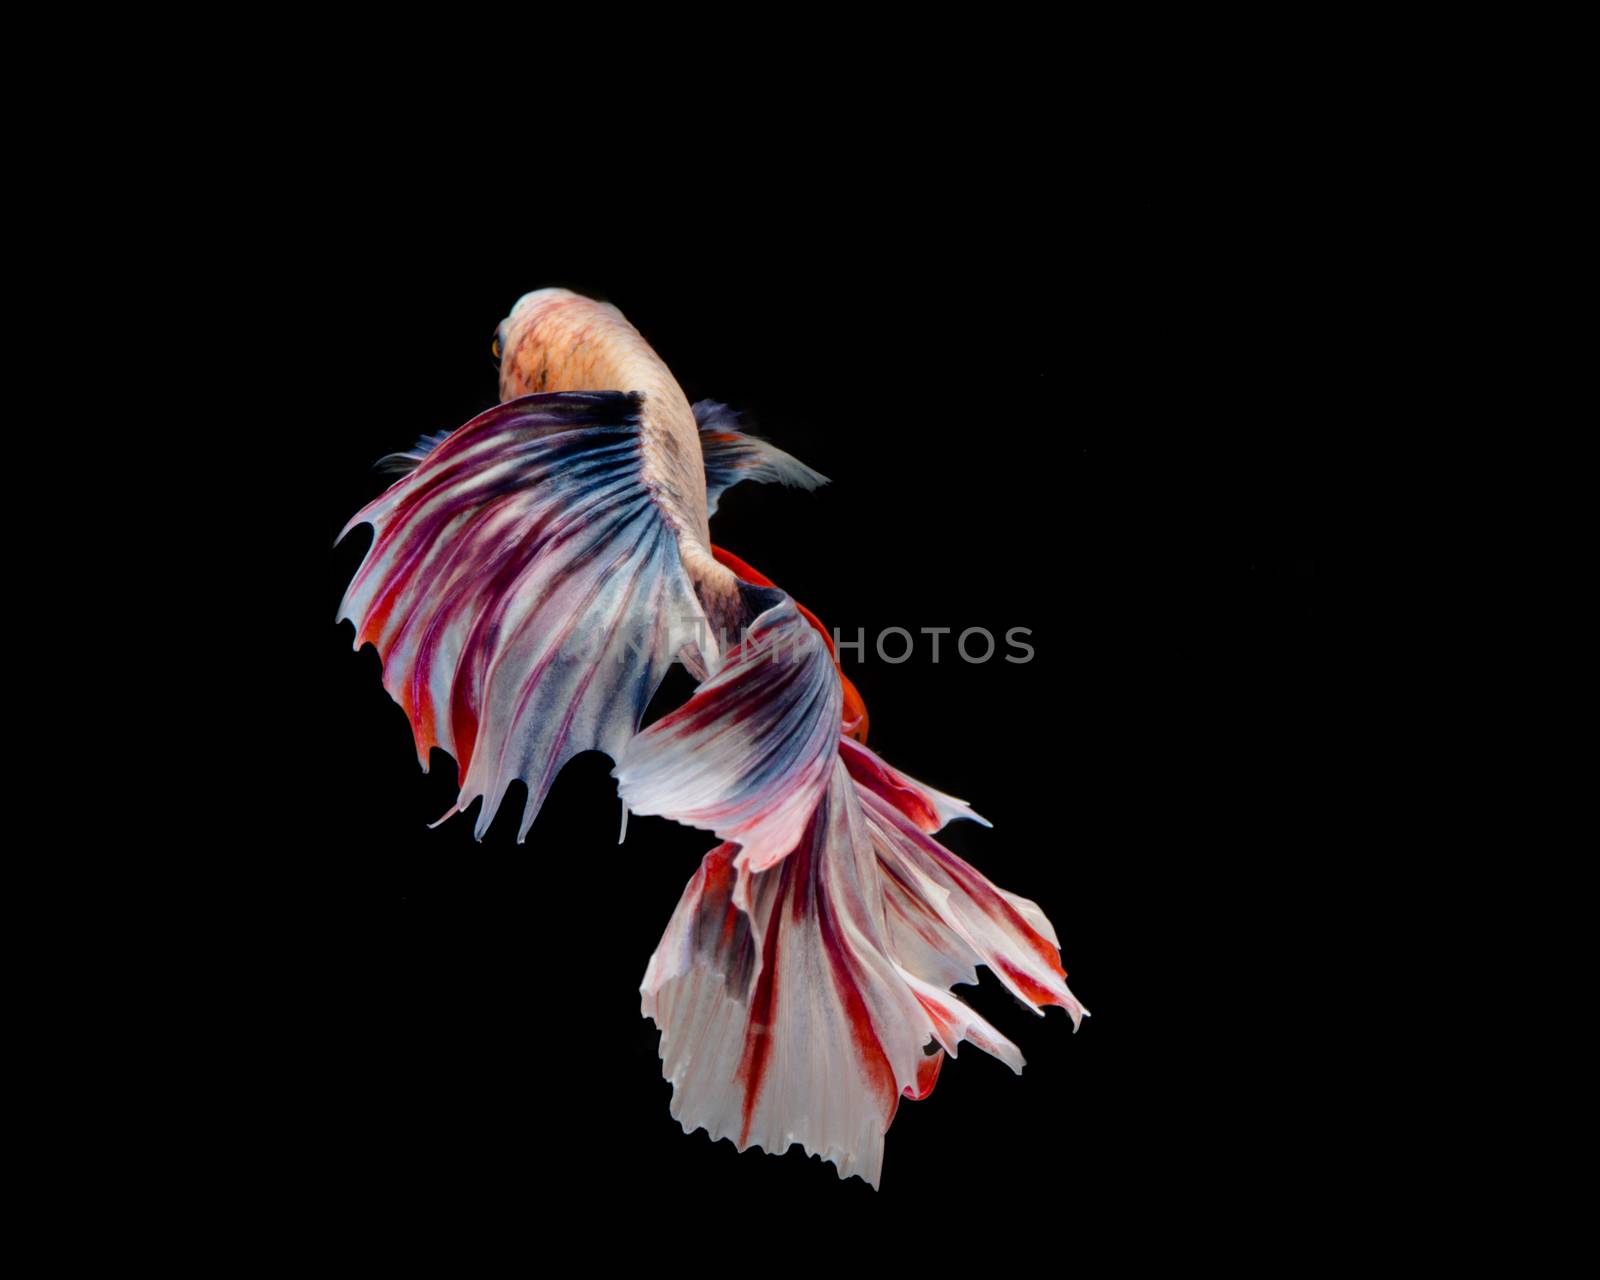 Multi-color betta fish, dancing fish by yuiyuize